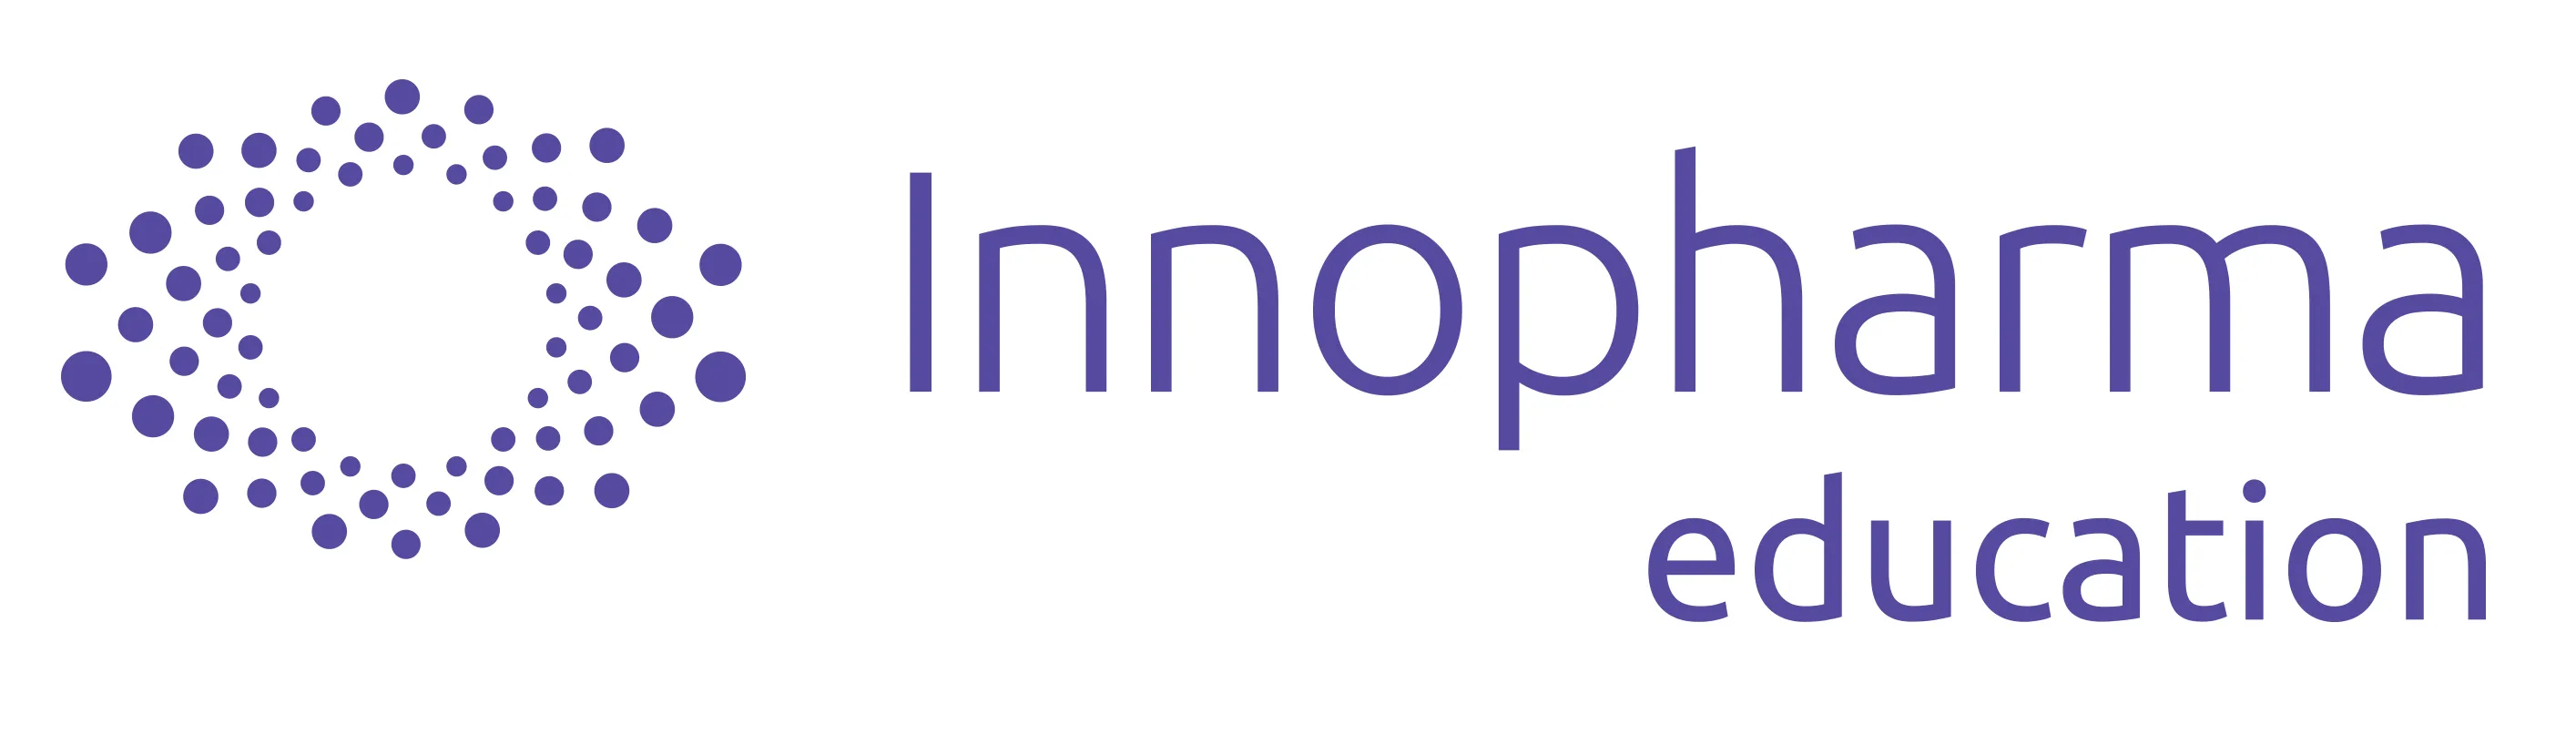 Innopharma education logo